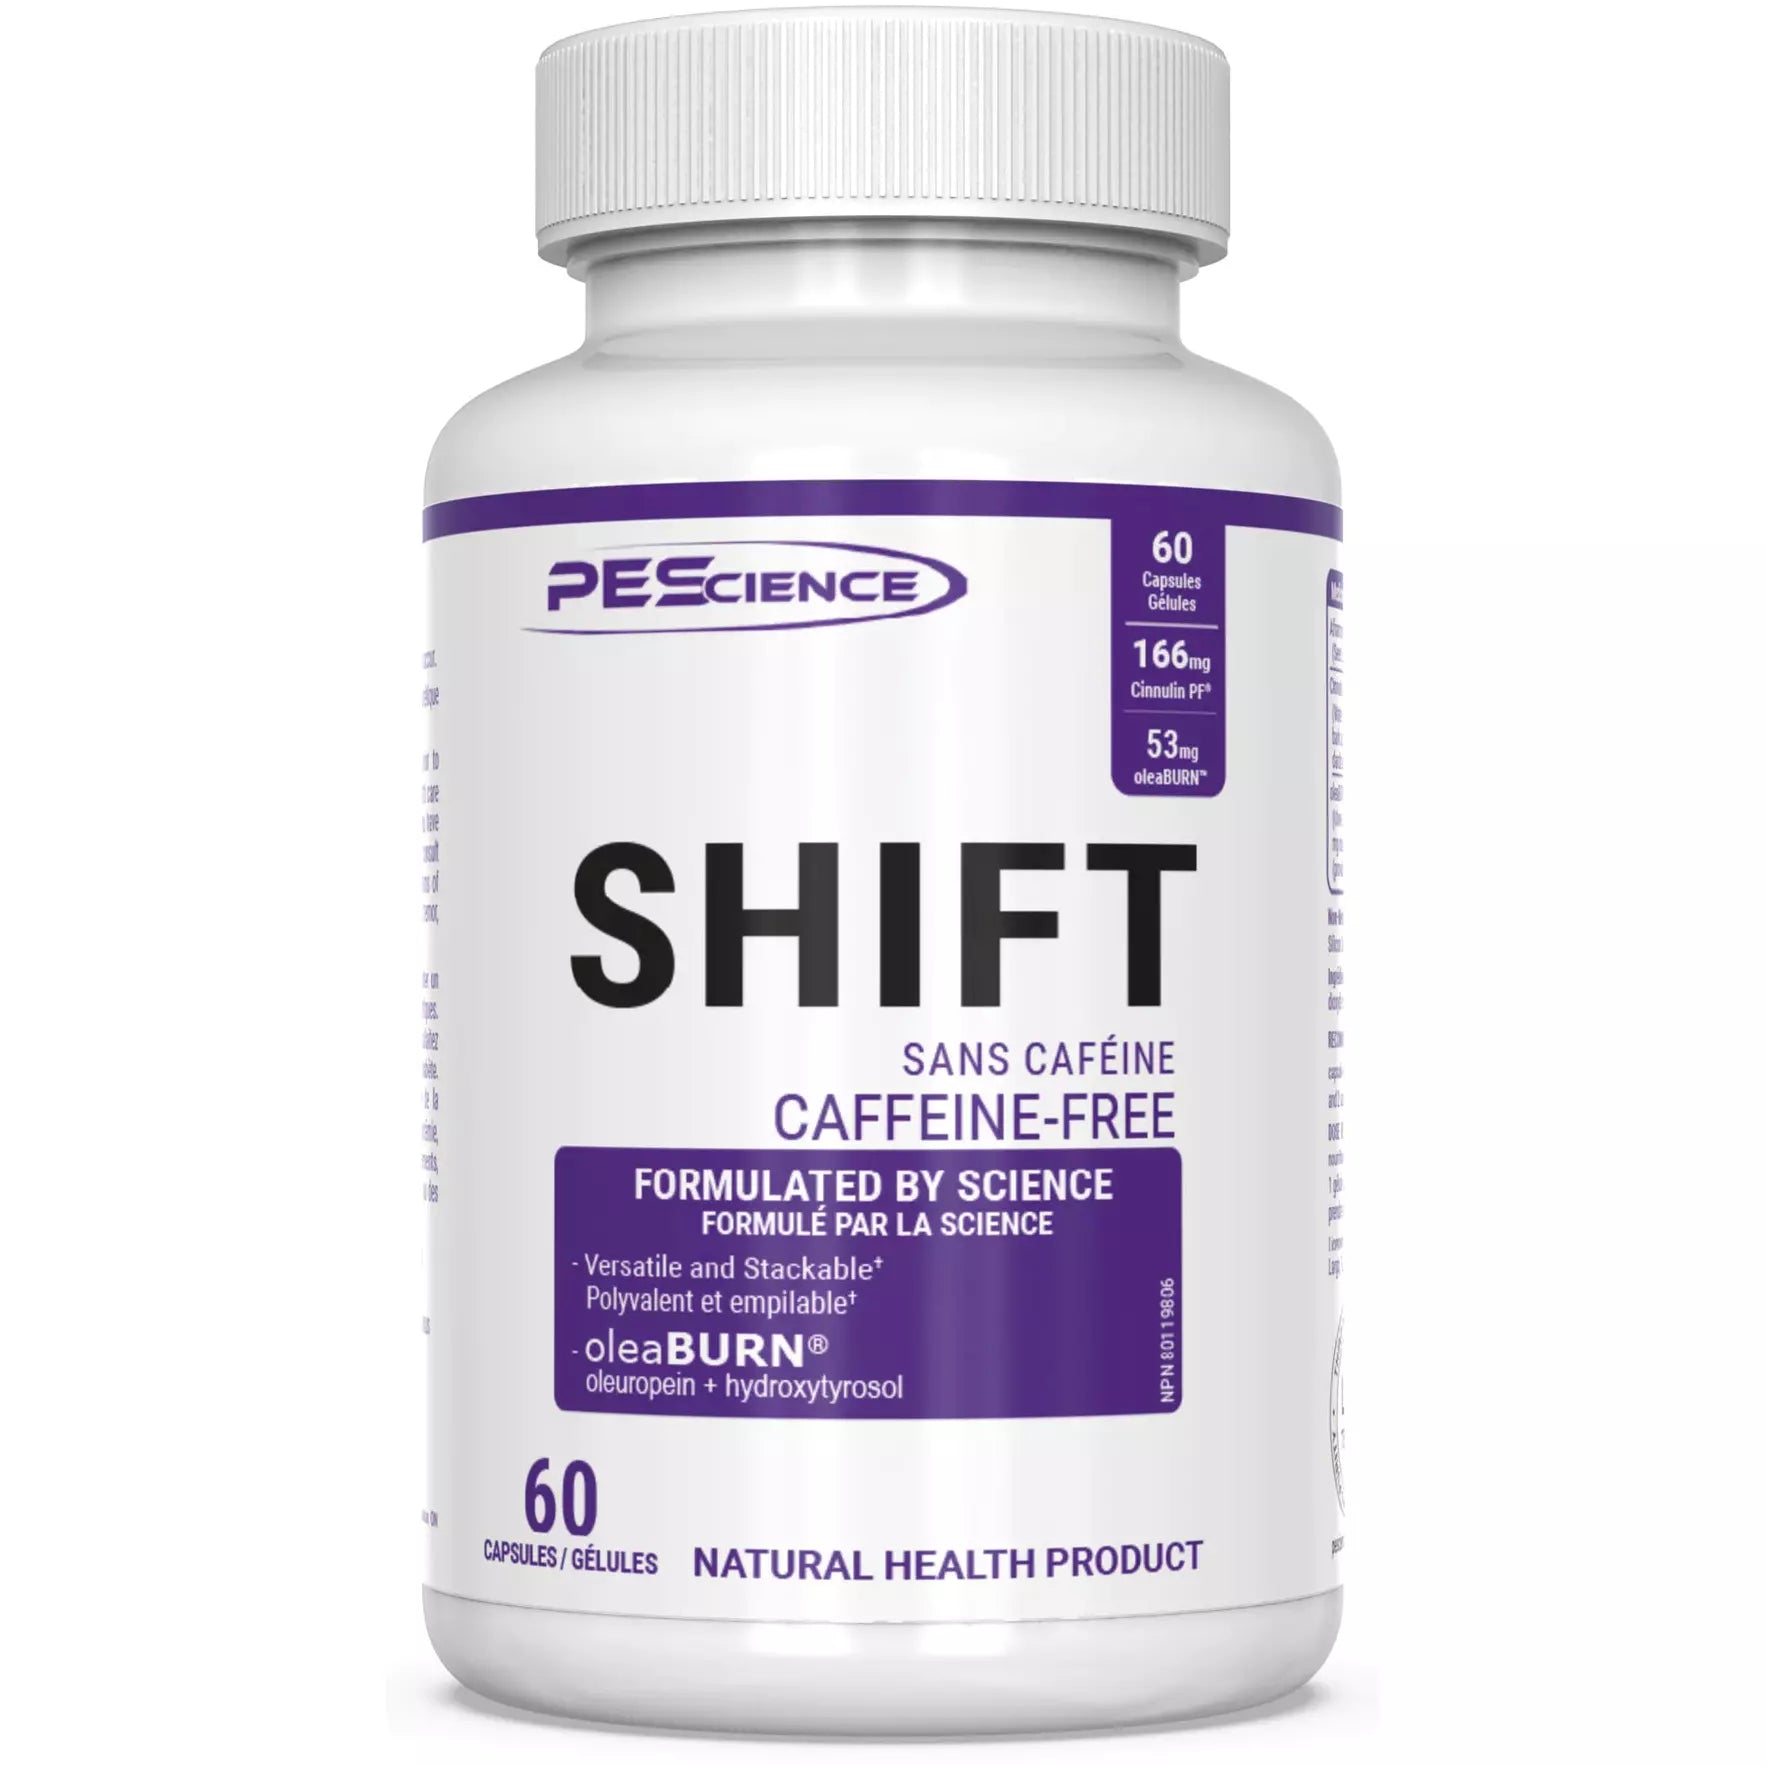 Pescience SHIFT 60 capsules PEScience Top Nutrition Canada